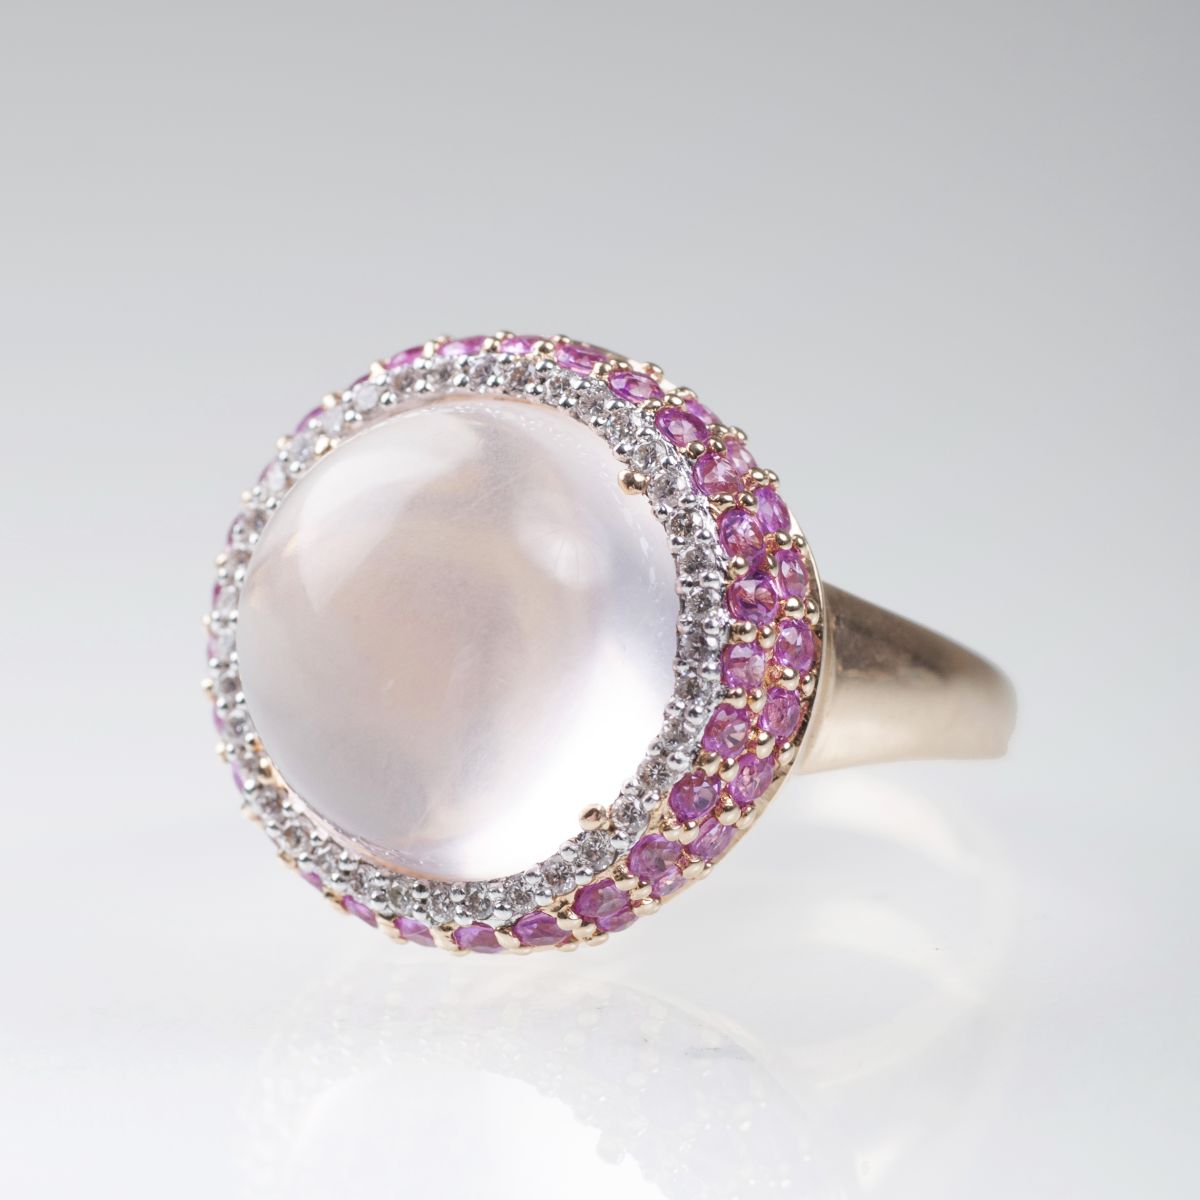 An elegant rosequartz pinksapphire ring with diamonds